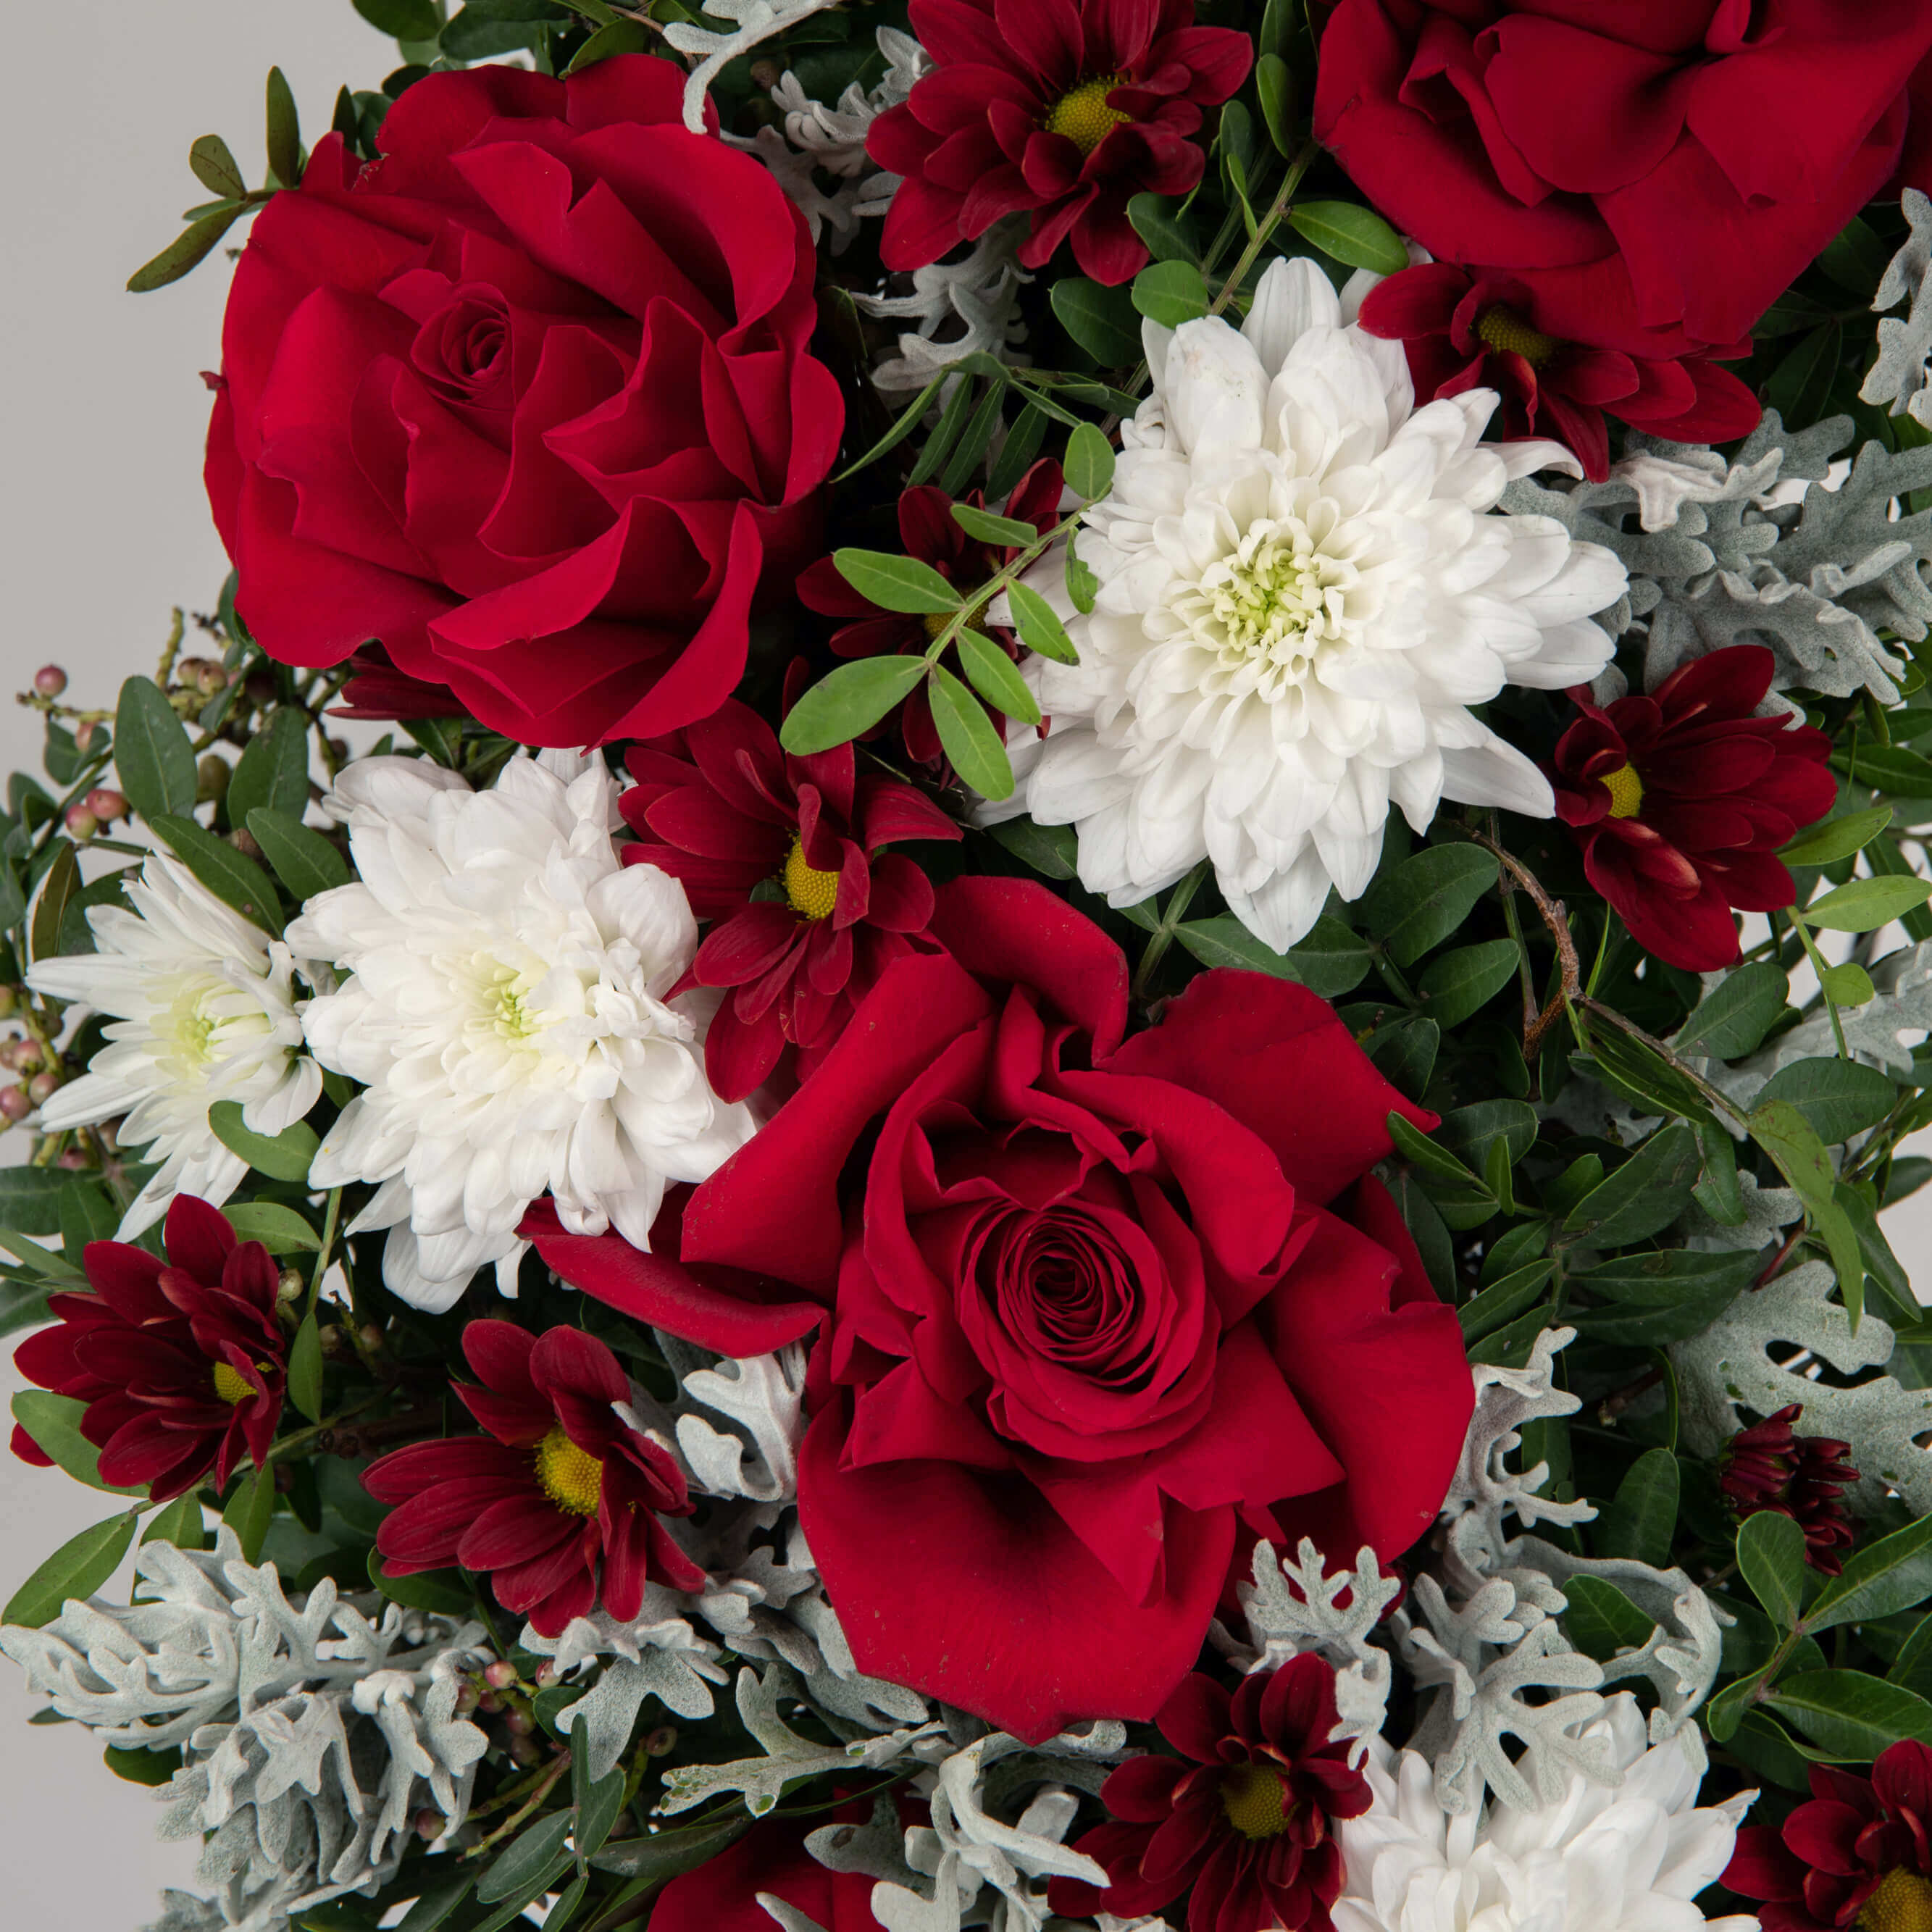 Coroana de flori rotunda cu crizanteme si trandafiri rosii, 1